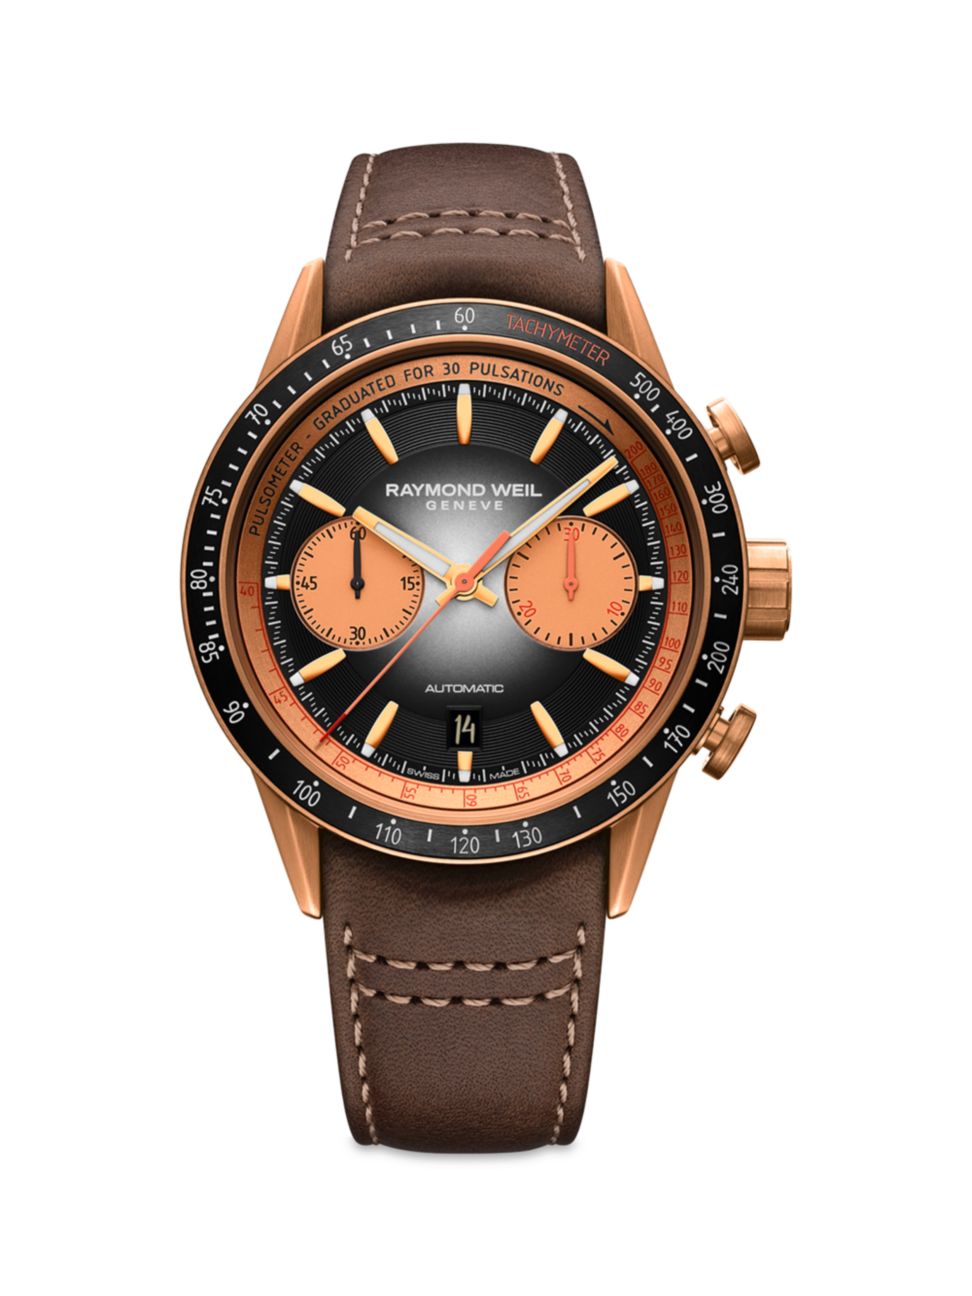 Raymond Weil Freelancer Men's Automatic Chronograph Bi-compax Bronze Leather Watch, 43.5mm  (7780-B1-20422)
Limited Edition: 300 units